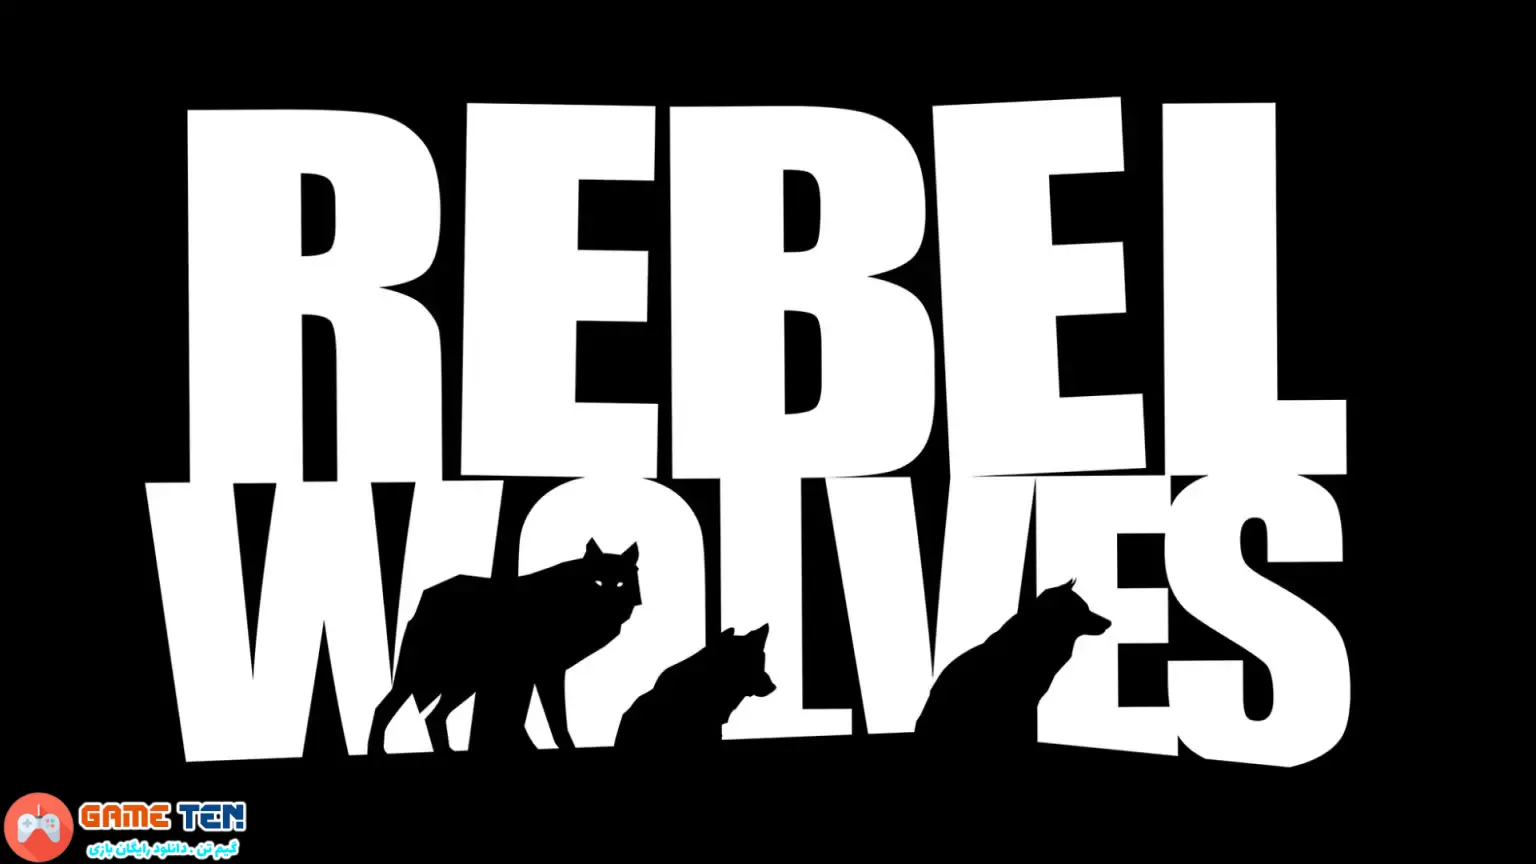 Rebel Wolves خالق بازی The Witcher 3 و Cyberpunk 2077 را به عنوان مدیر خلاقیت استخدام کرد